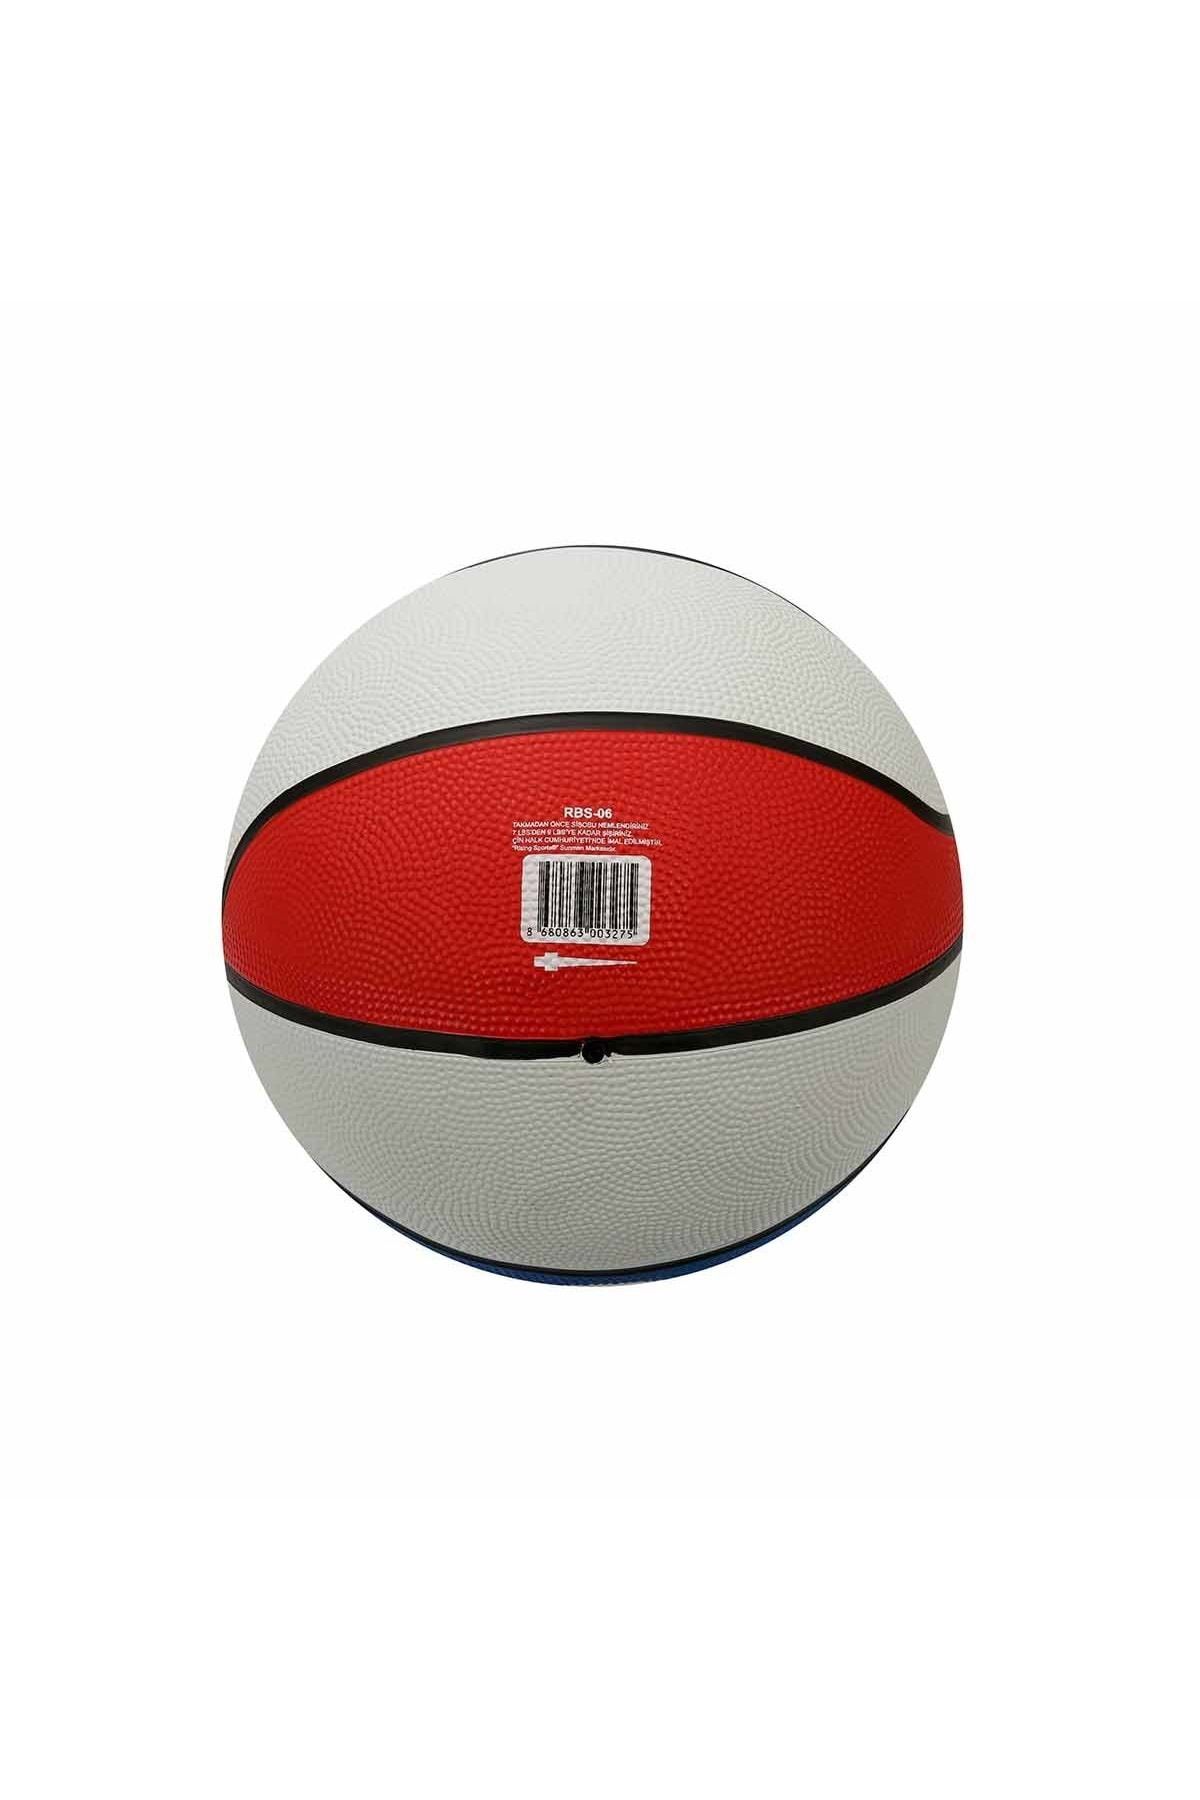 Bubu Basketbol Topu Rising Sports No:7 Kırmızı/Beyaz/Mavi